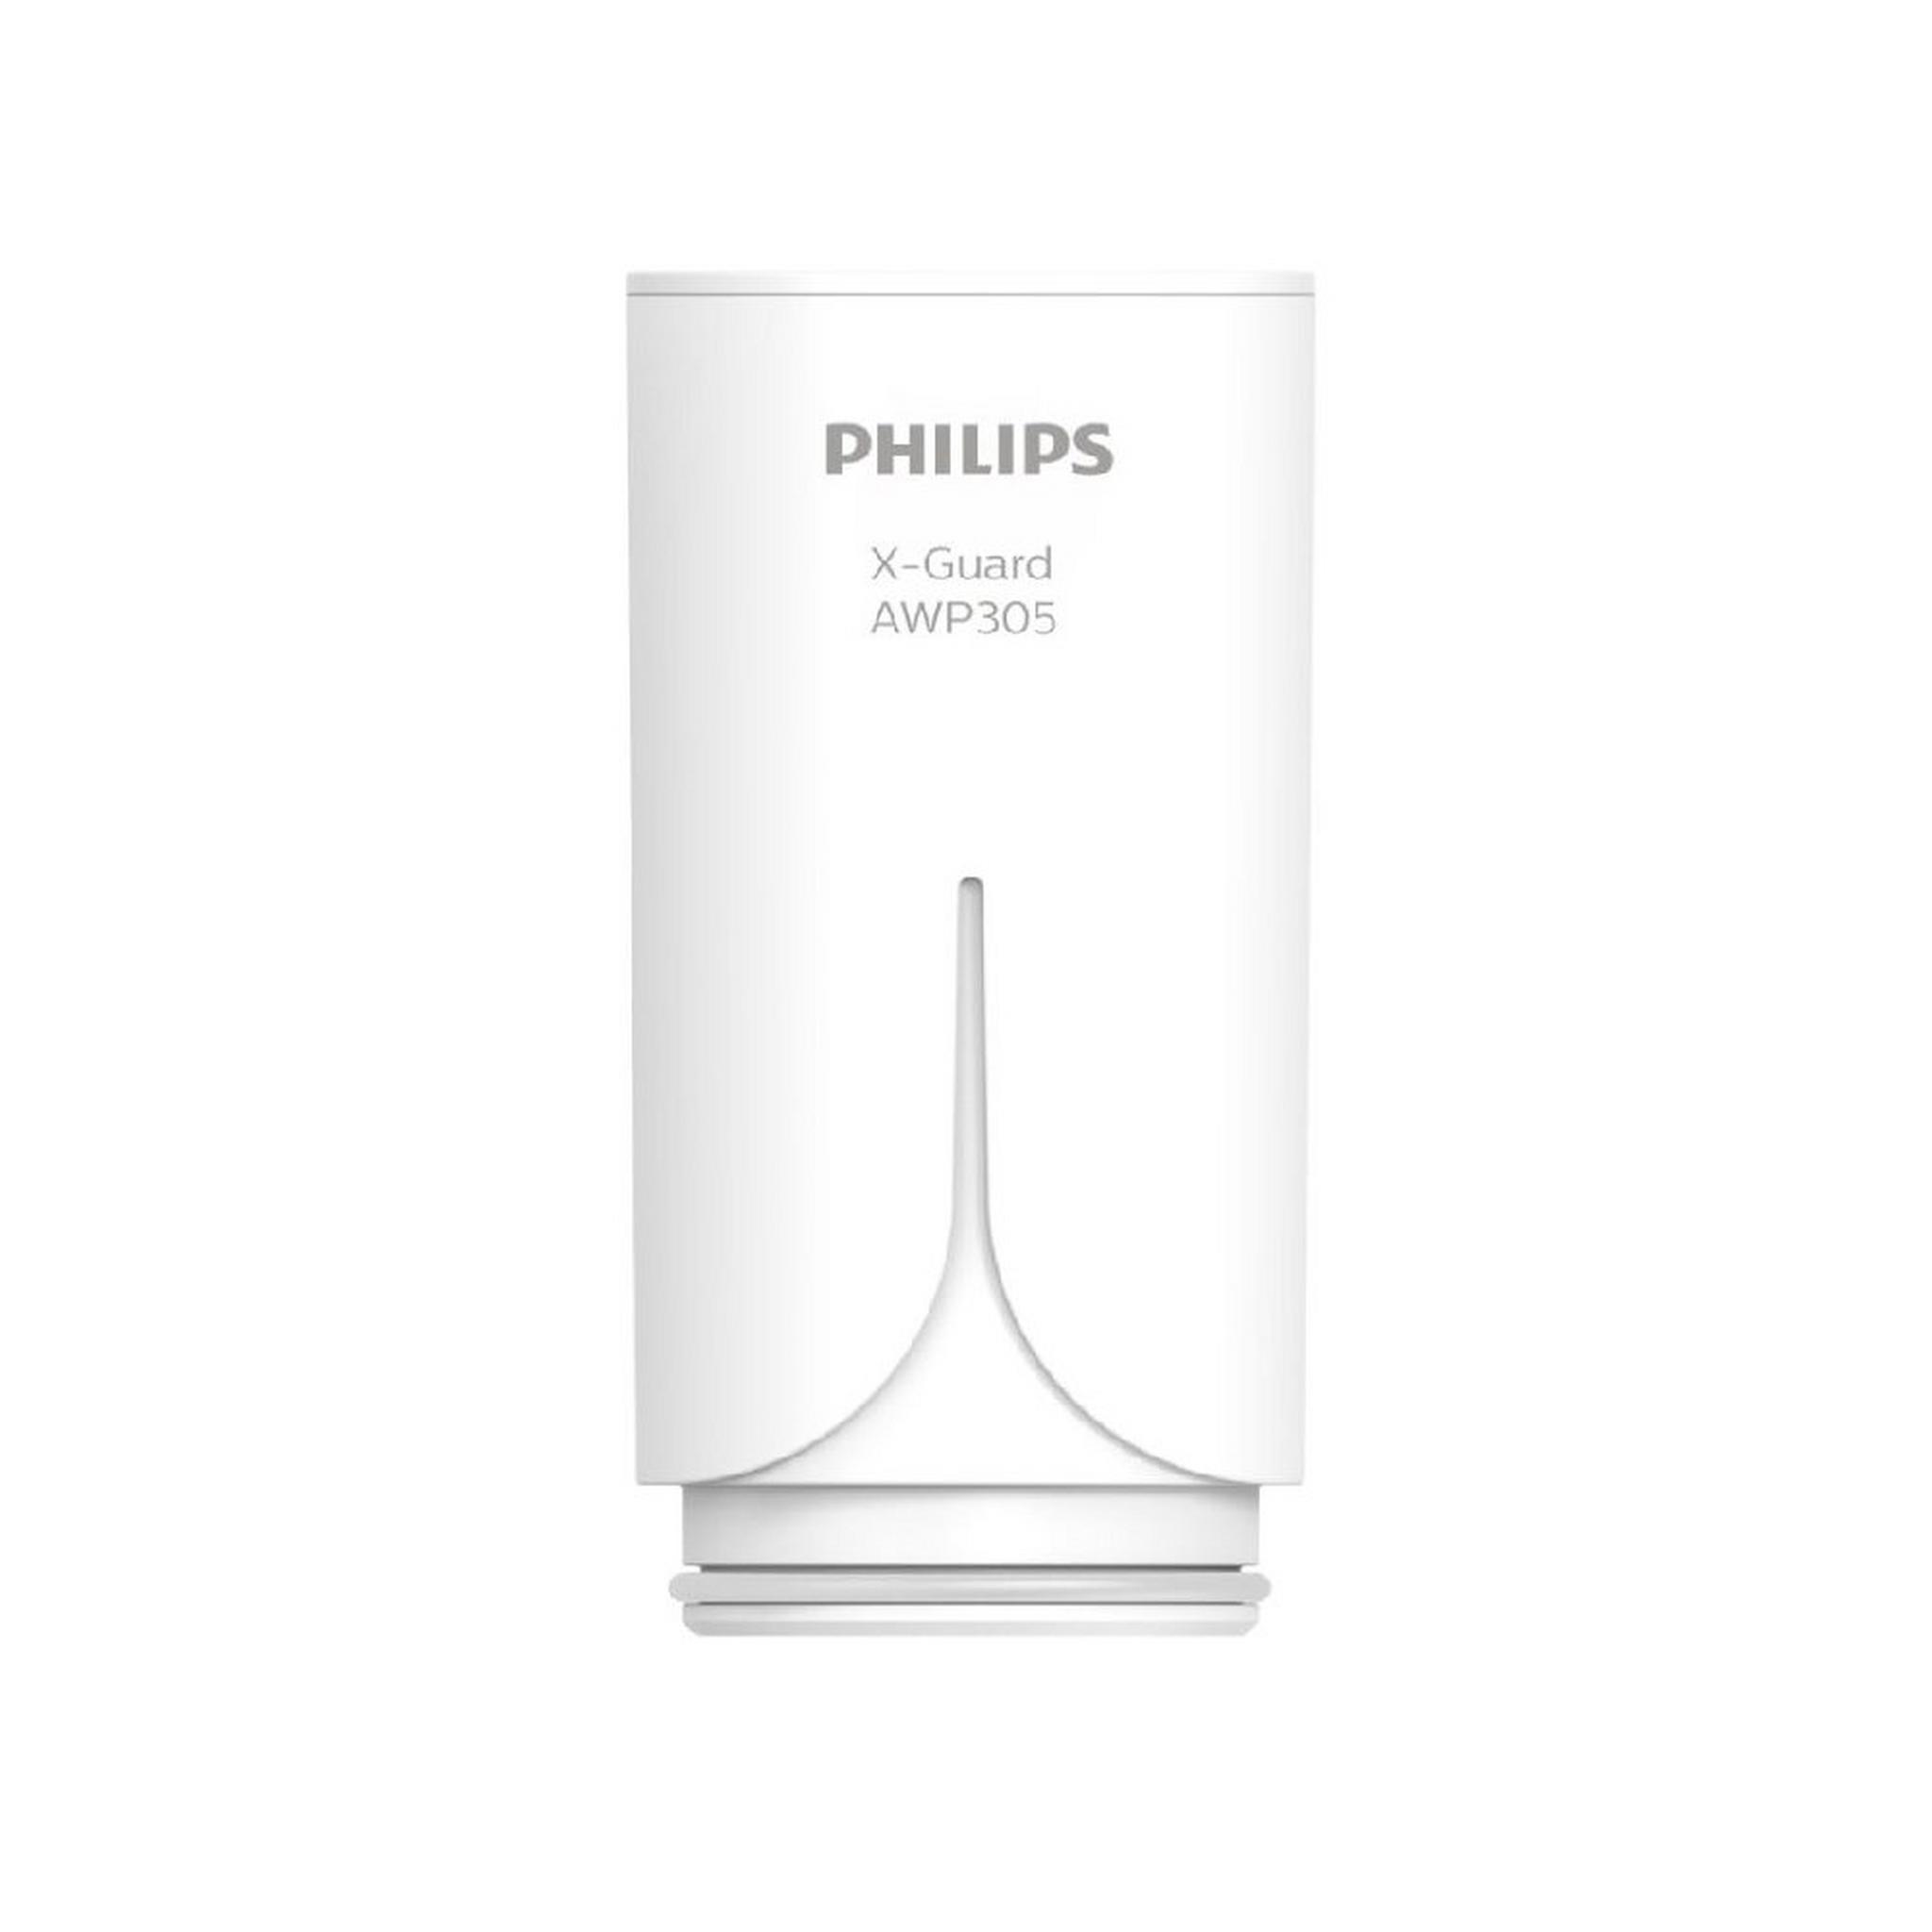 PHILIPS On-Tap Filter cartridge, 1000 Liters, AWP305 - White